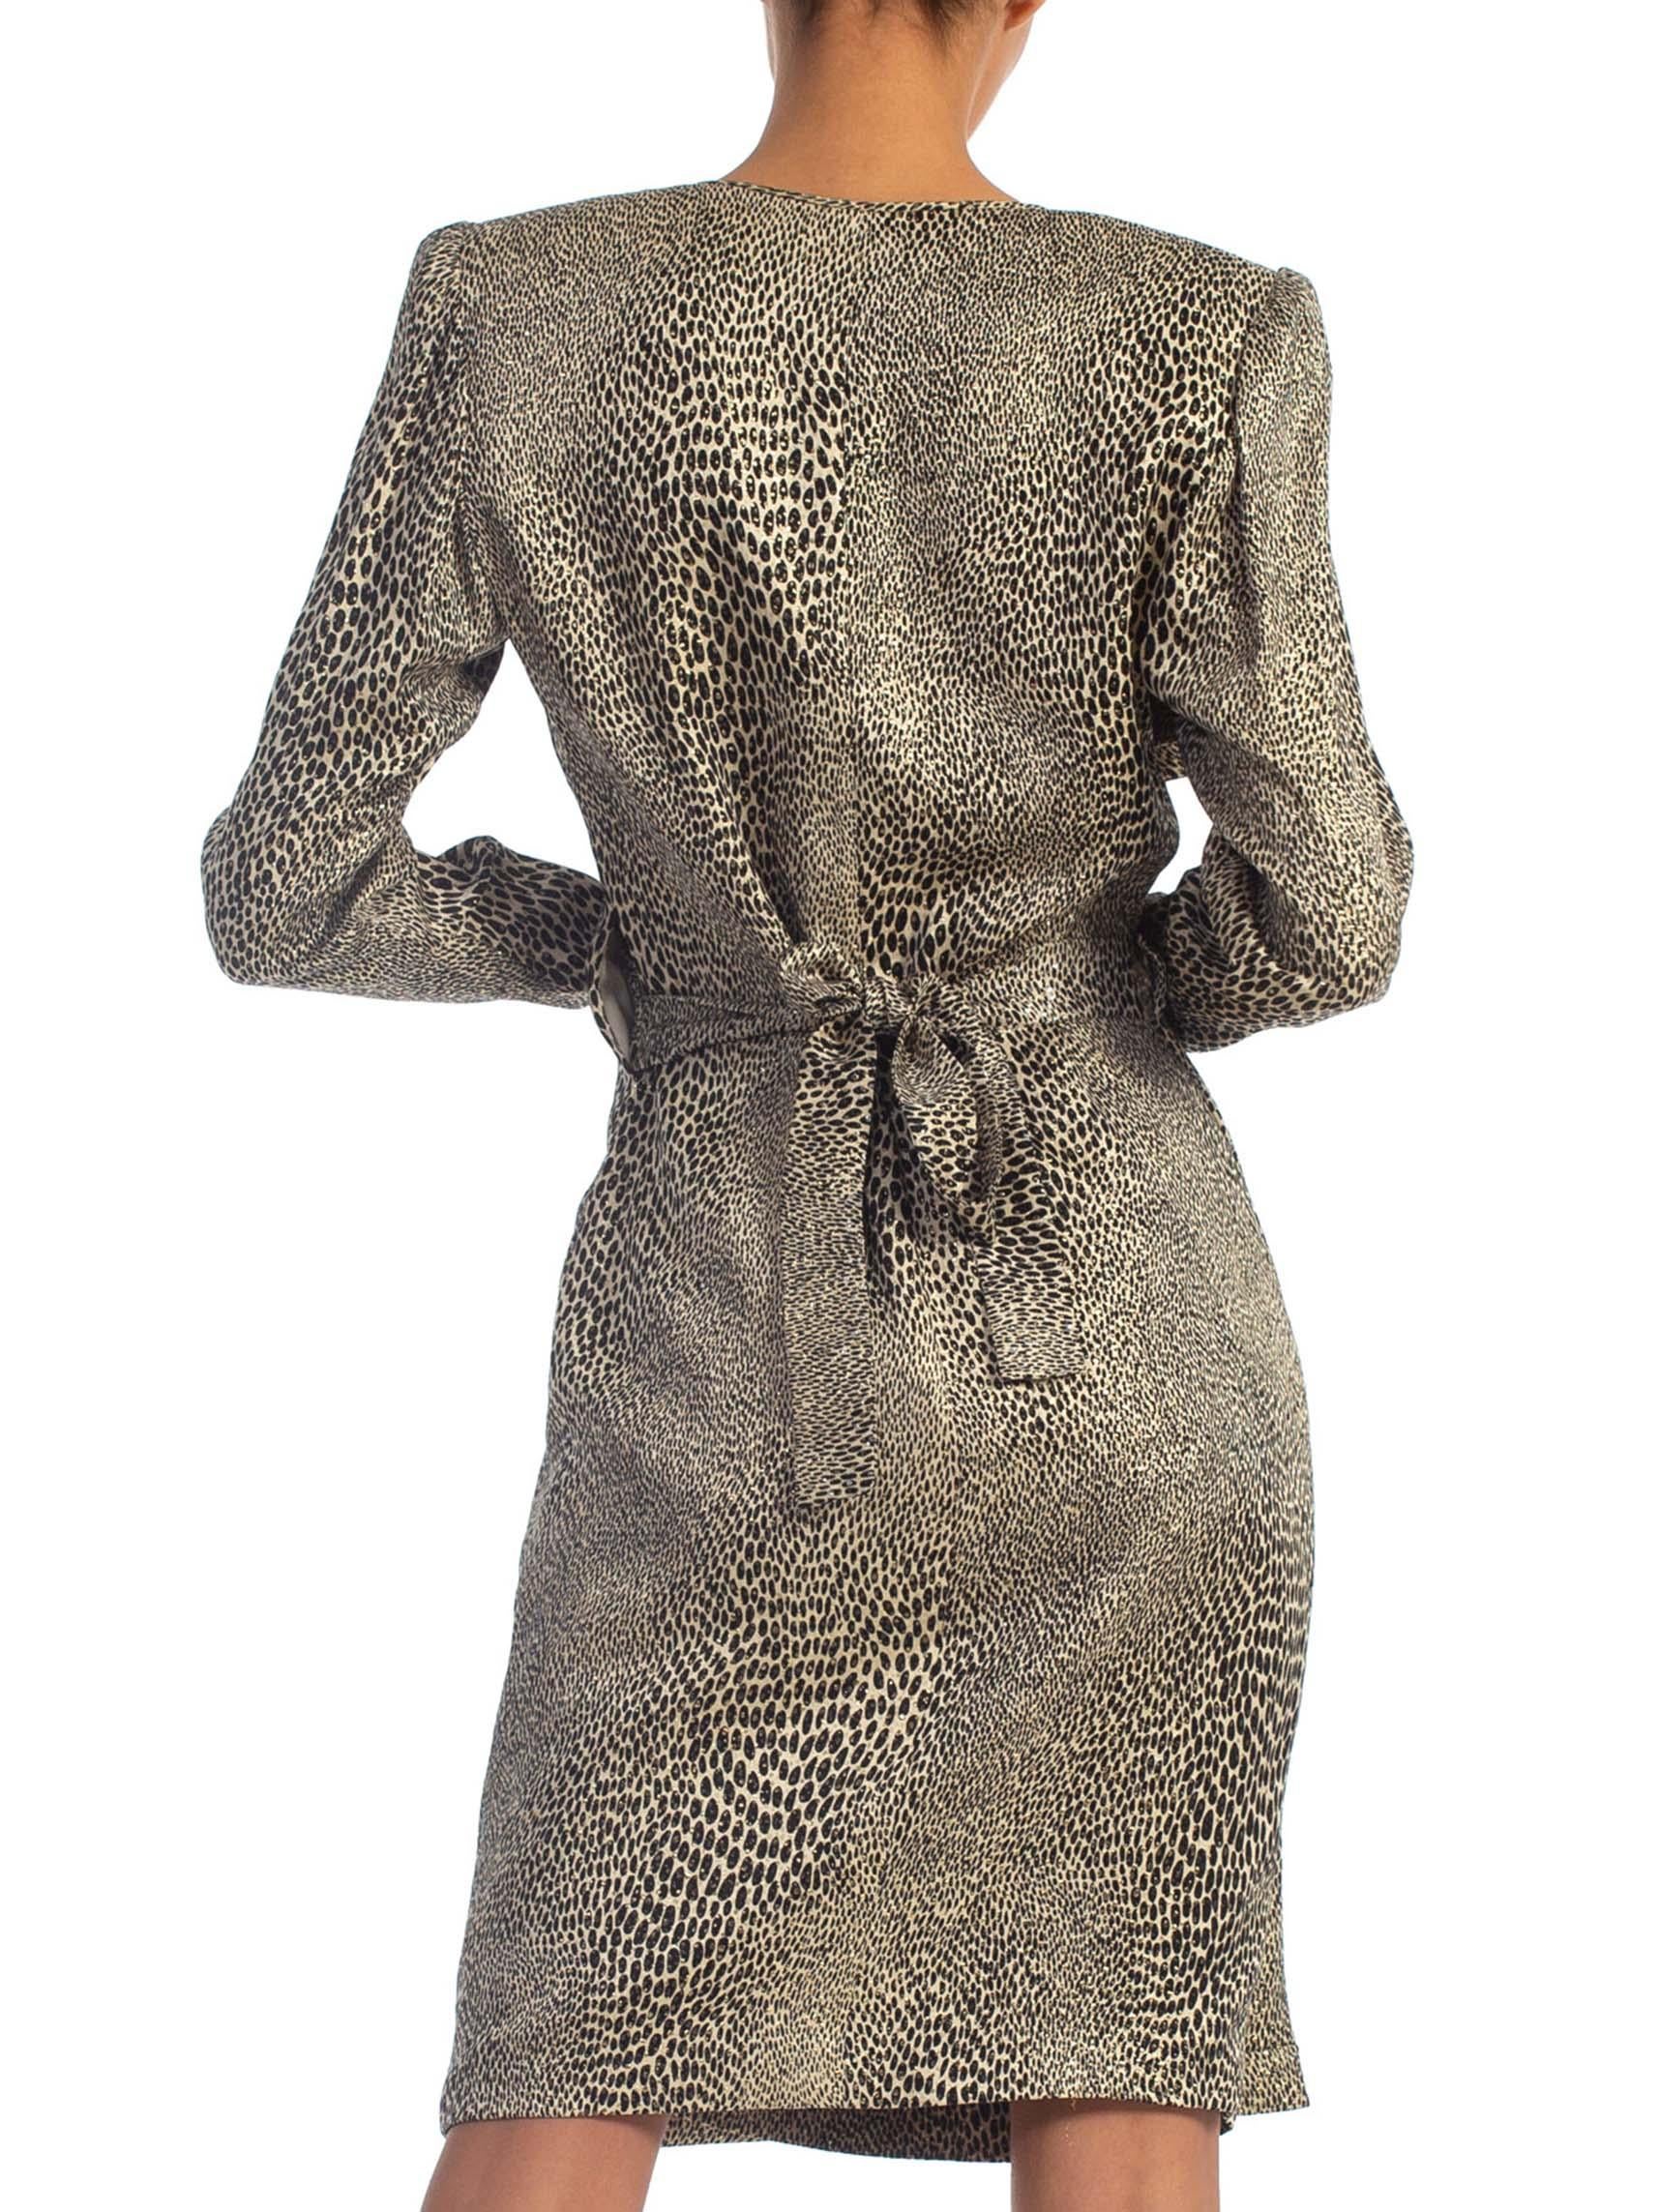 1980S EMANUEL UNGARO Metallic Silk Lamé Cheetah Print Wrap Cocktail Dress For Sale 2